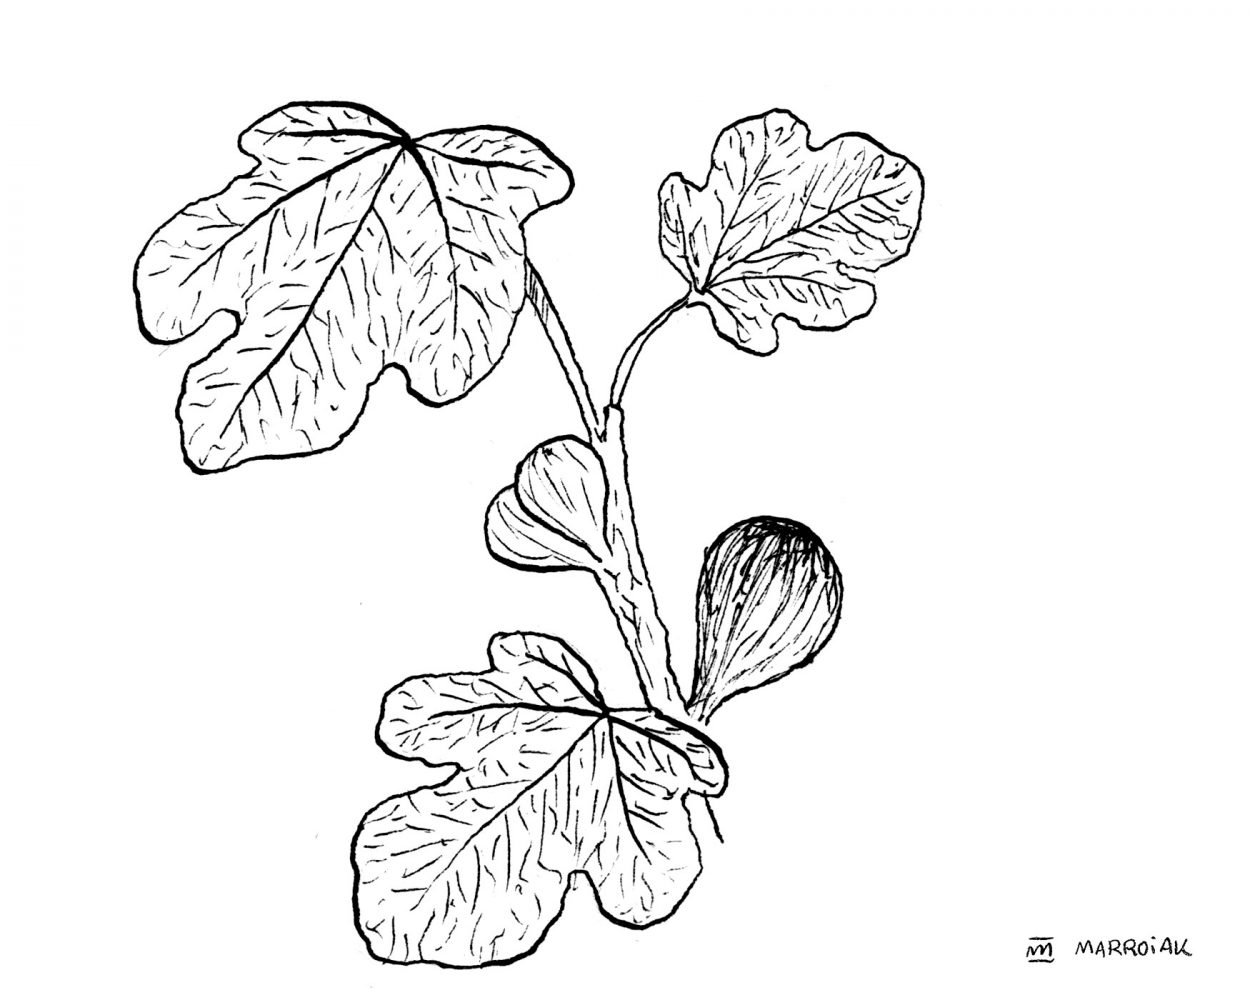 Dibujo higuera (Ficus carica - figuera) blanco y negro